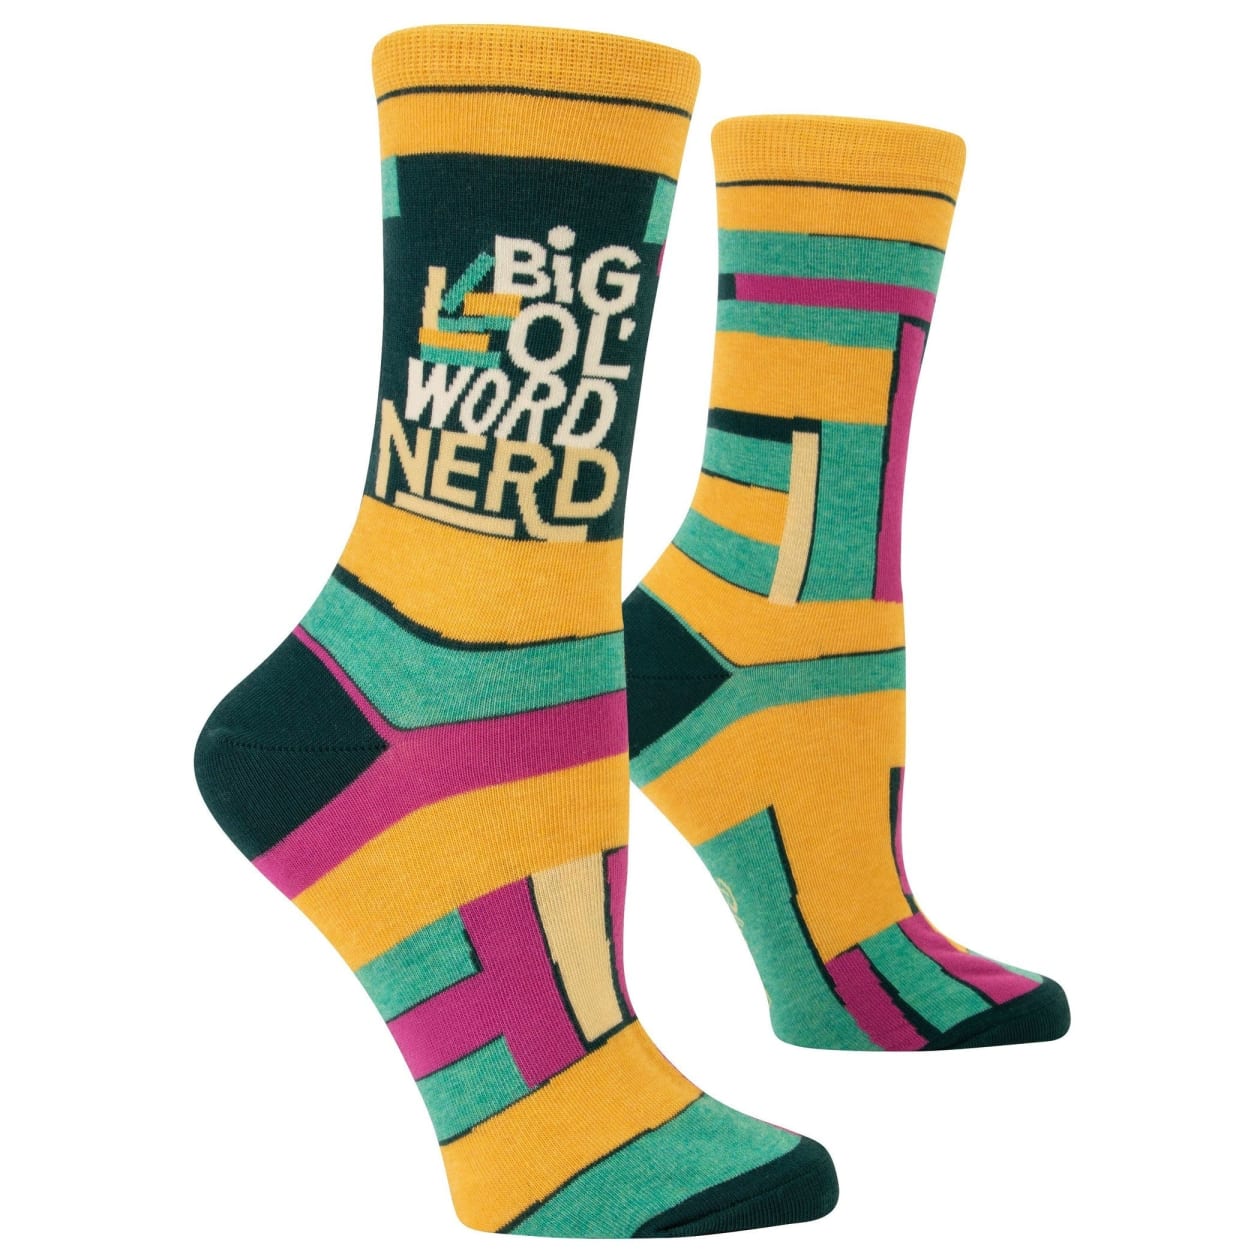 Big Ol' Word Nerd Women's Crew Novelty Socks | BlueQ at GetBullish